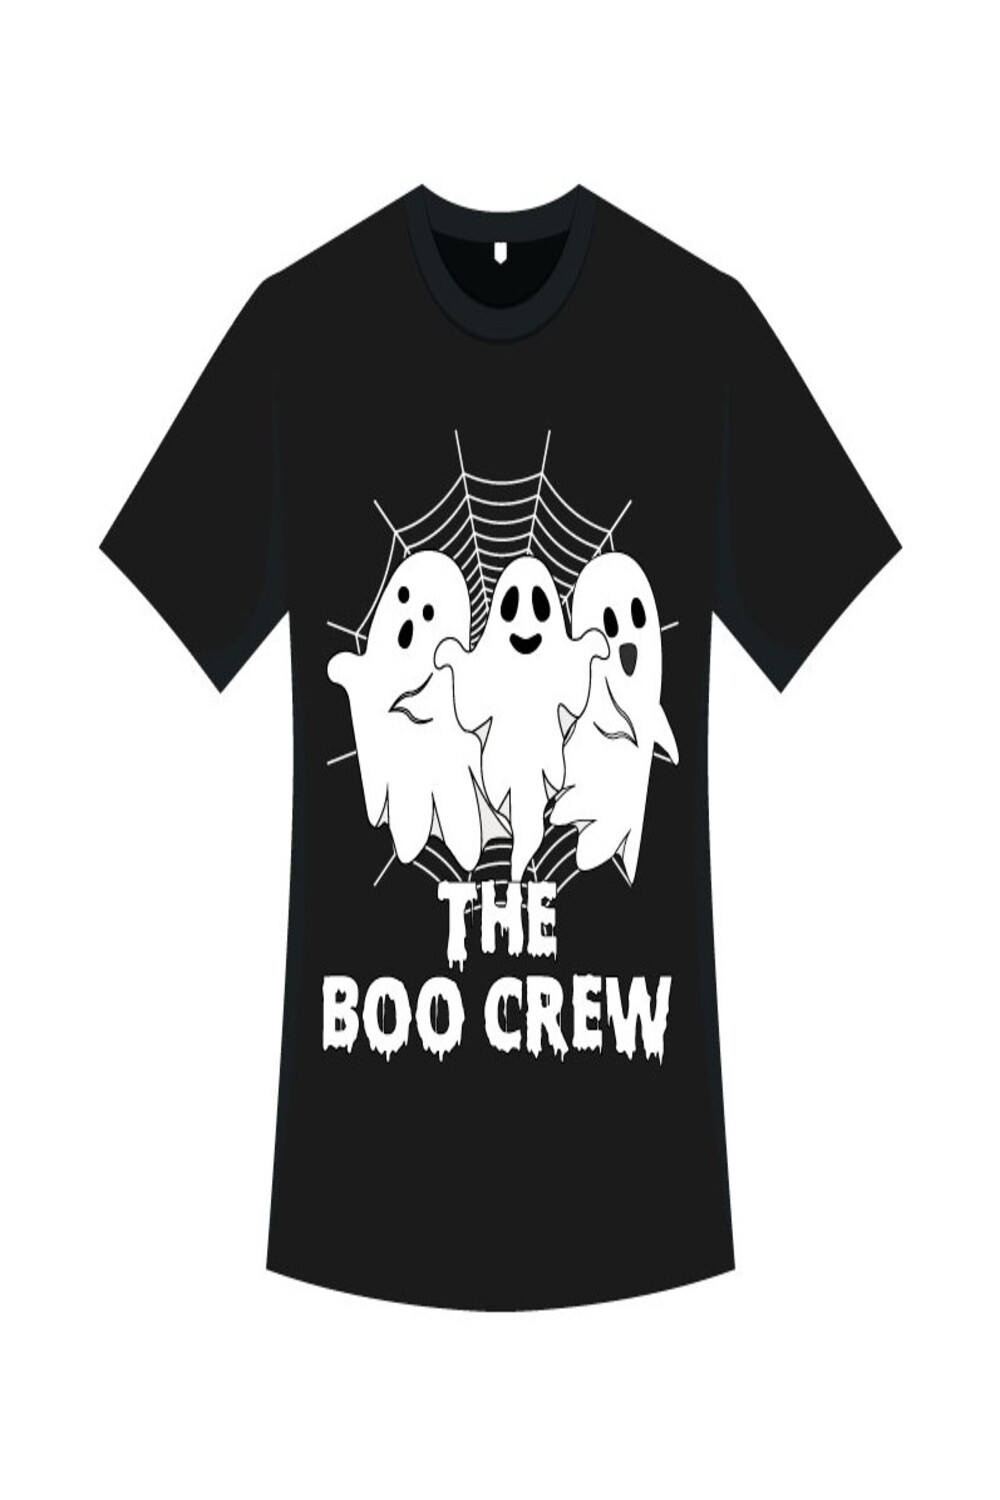 Halloween Stylish Classic T-shirt Pinterest image.